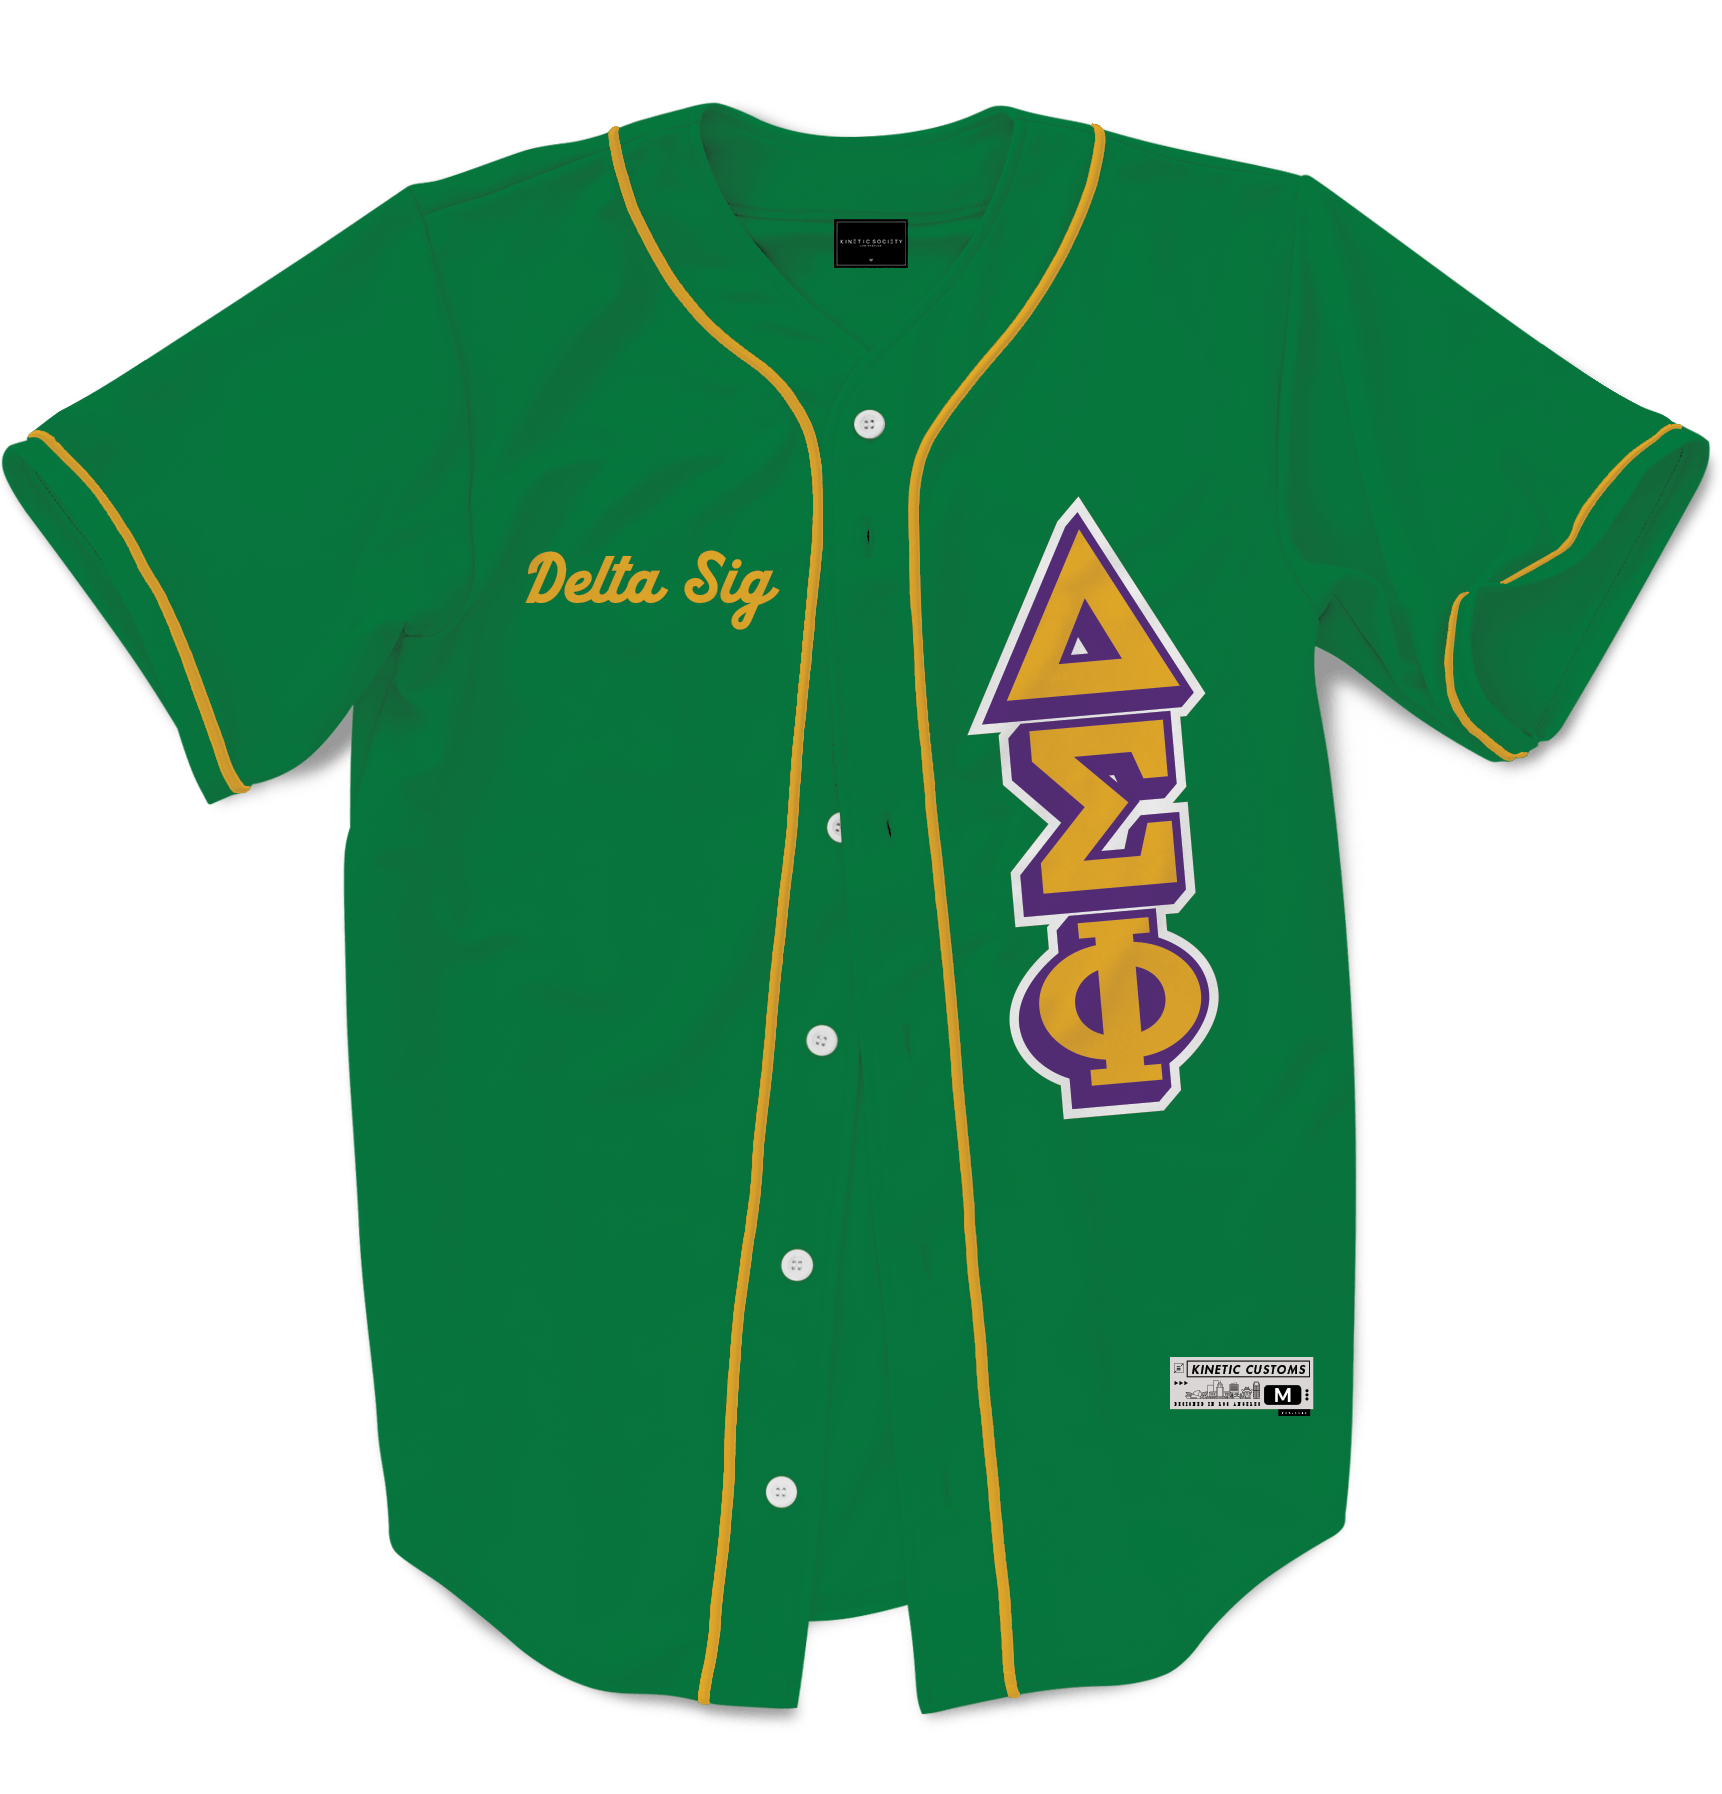 Delta Sigma Phi - The Block Baseball Jersey Premium Baseball Kinetic Society LLC 